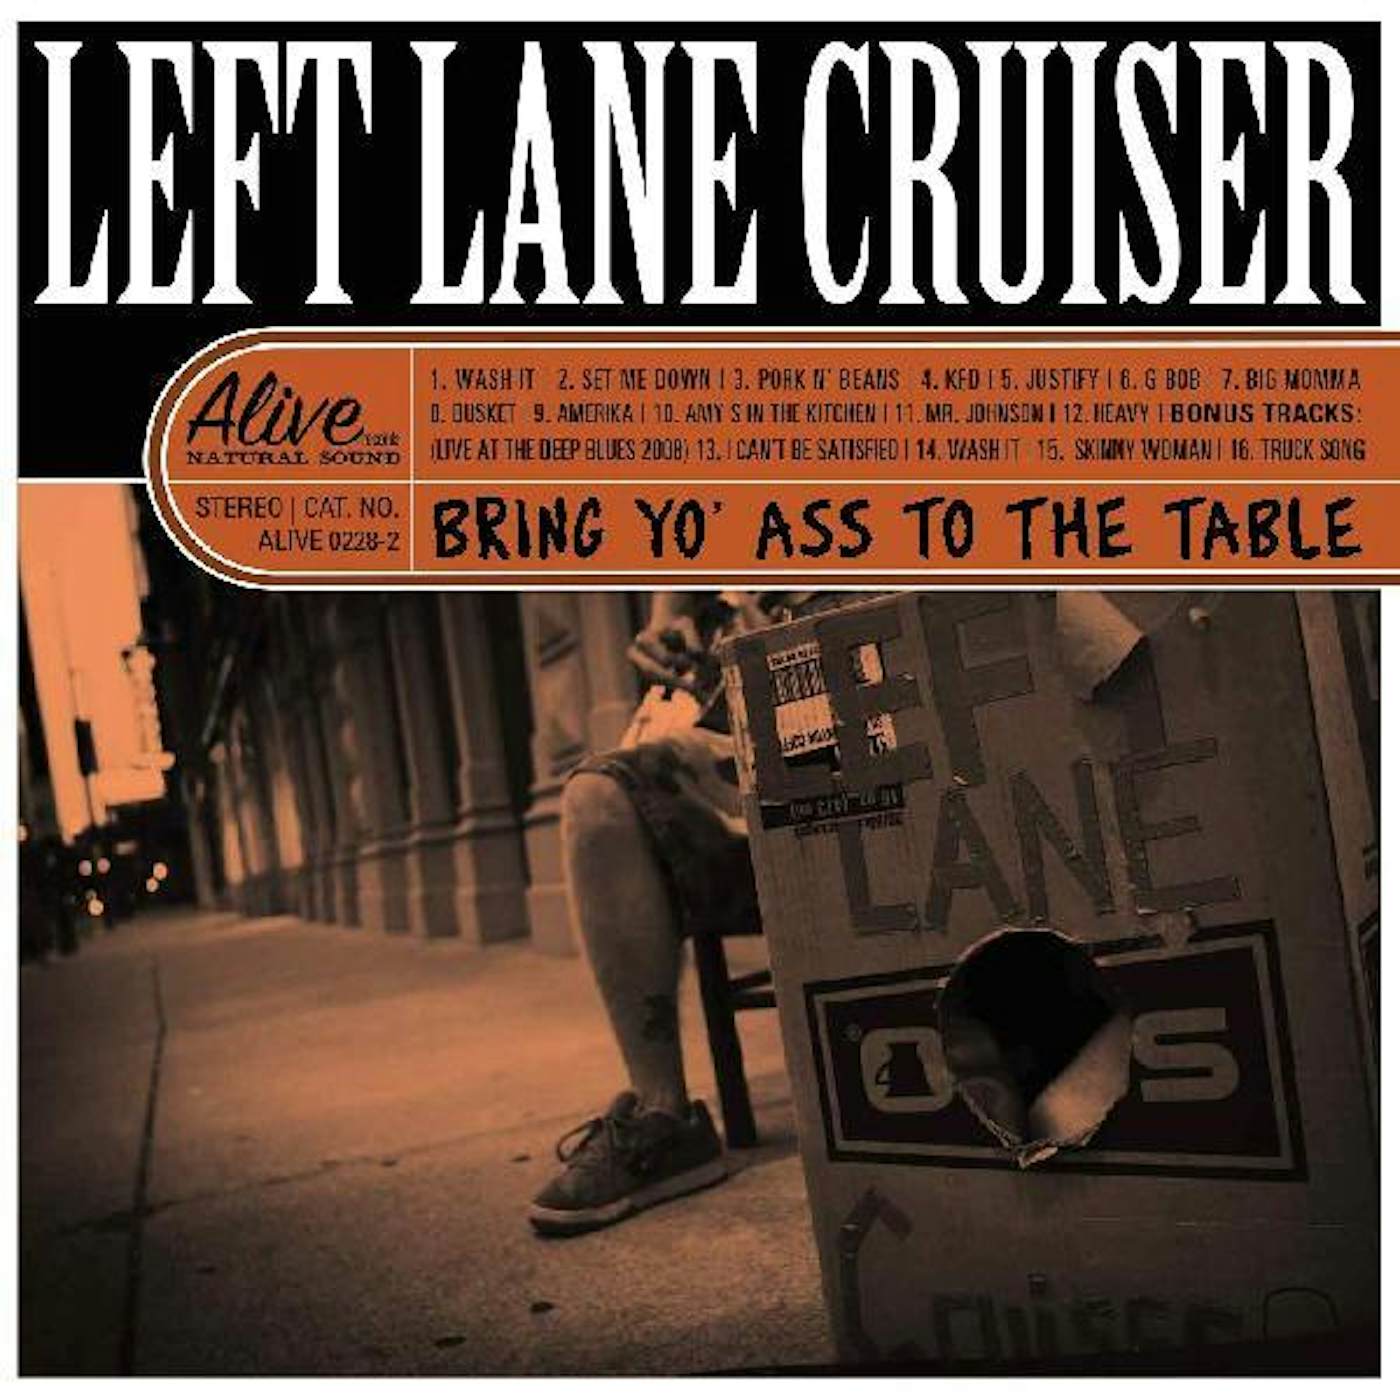 Left Lane Cruiser Bring Yo' Ass To The Table CD